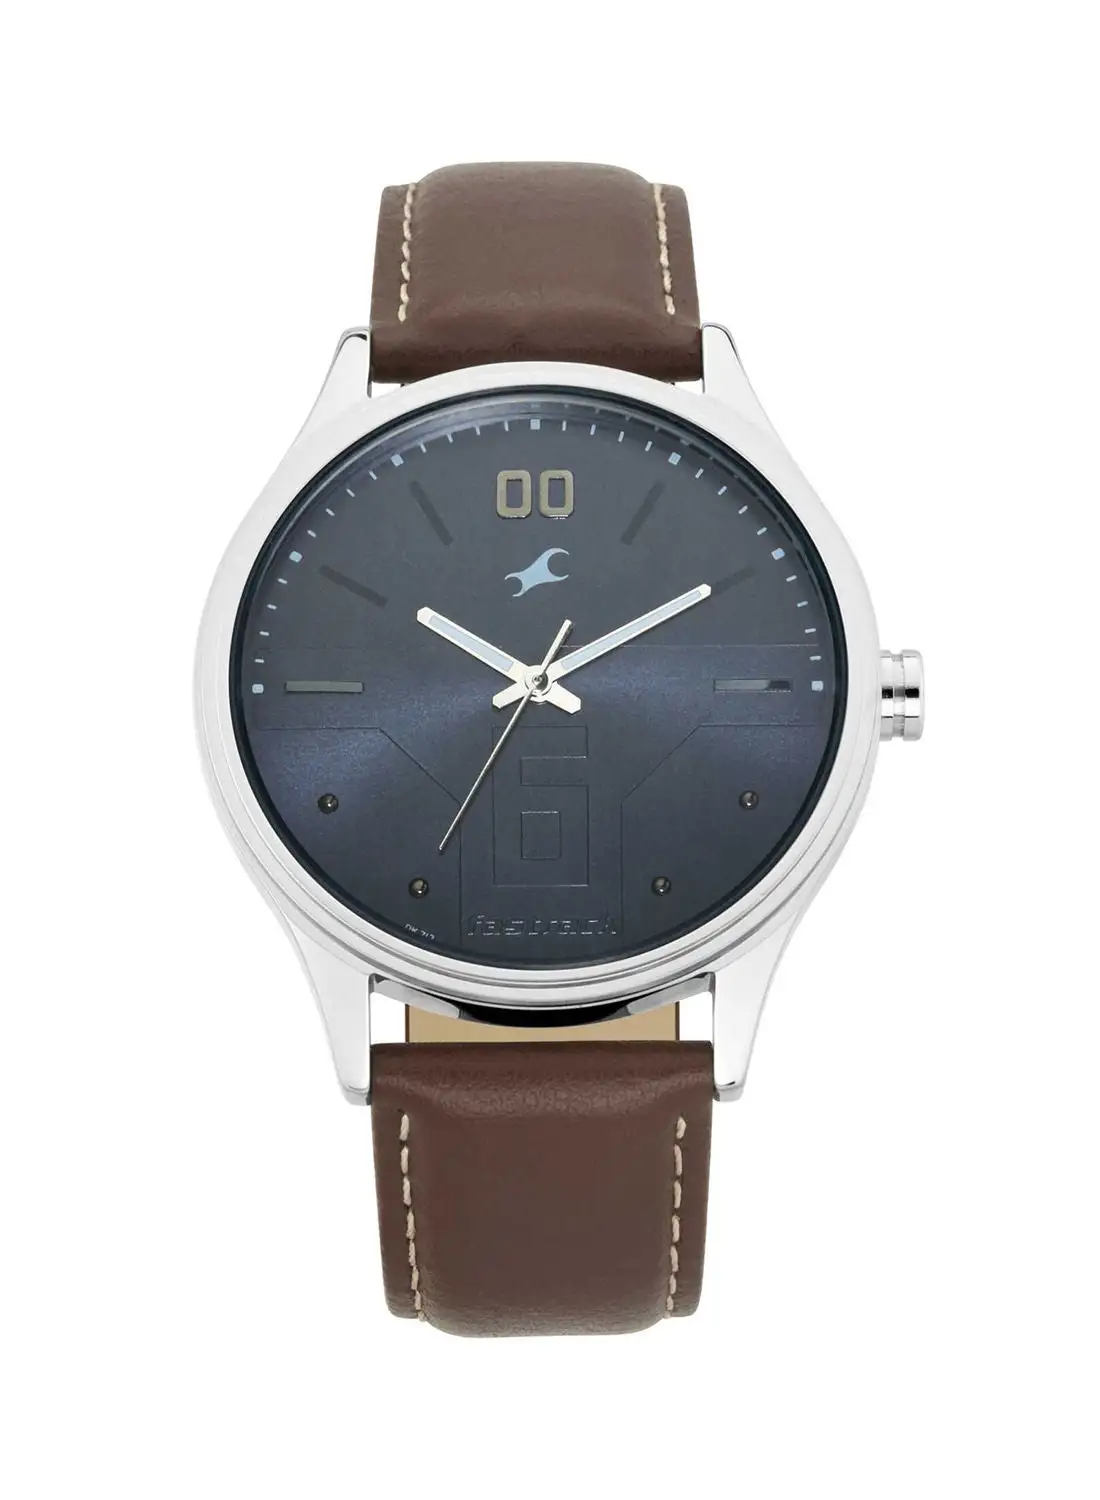 fastrack Leather Analog Wrist Watch 3247SL01